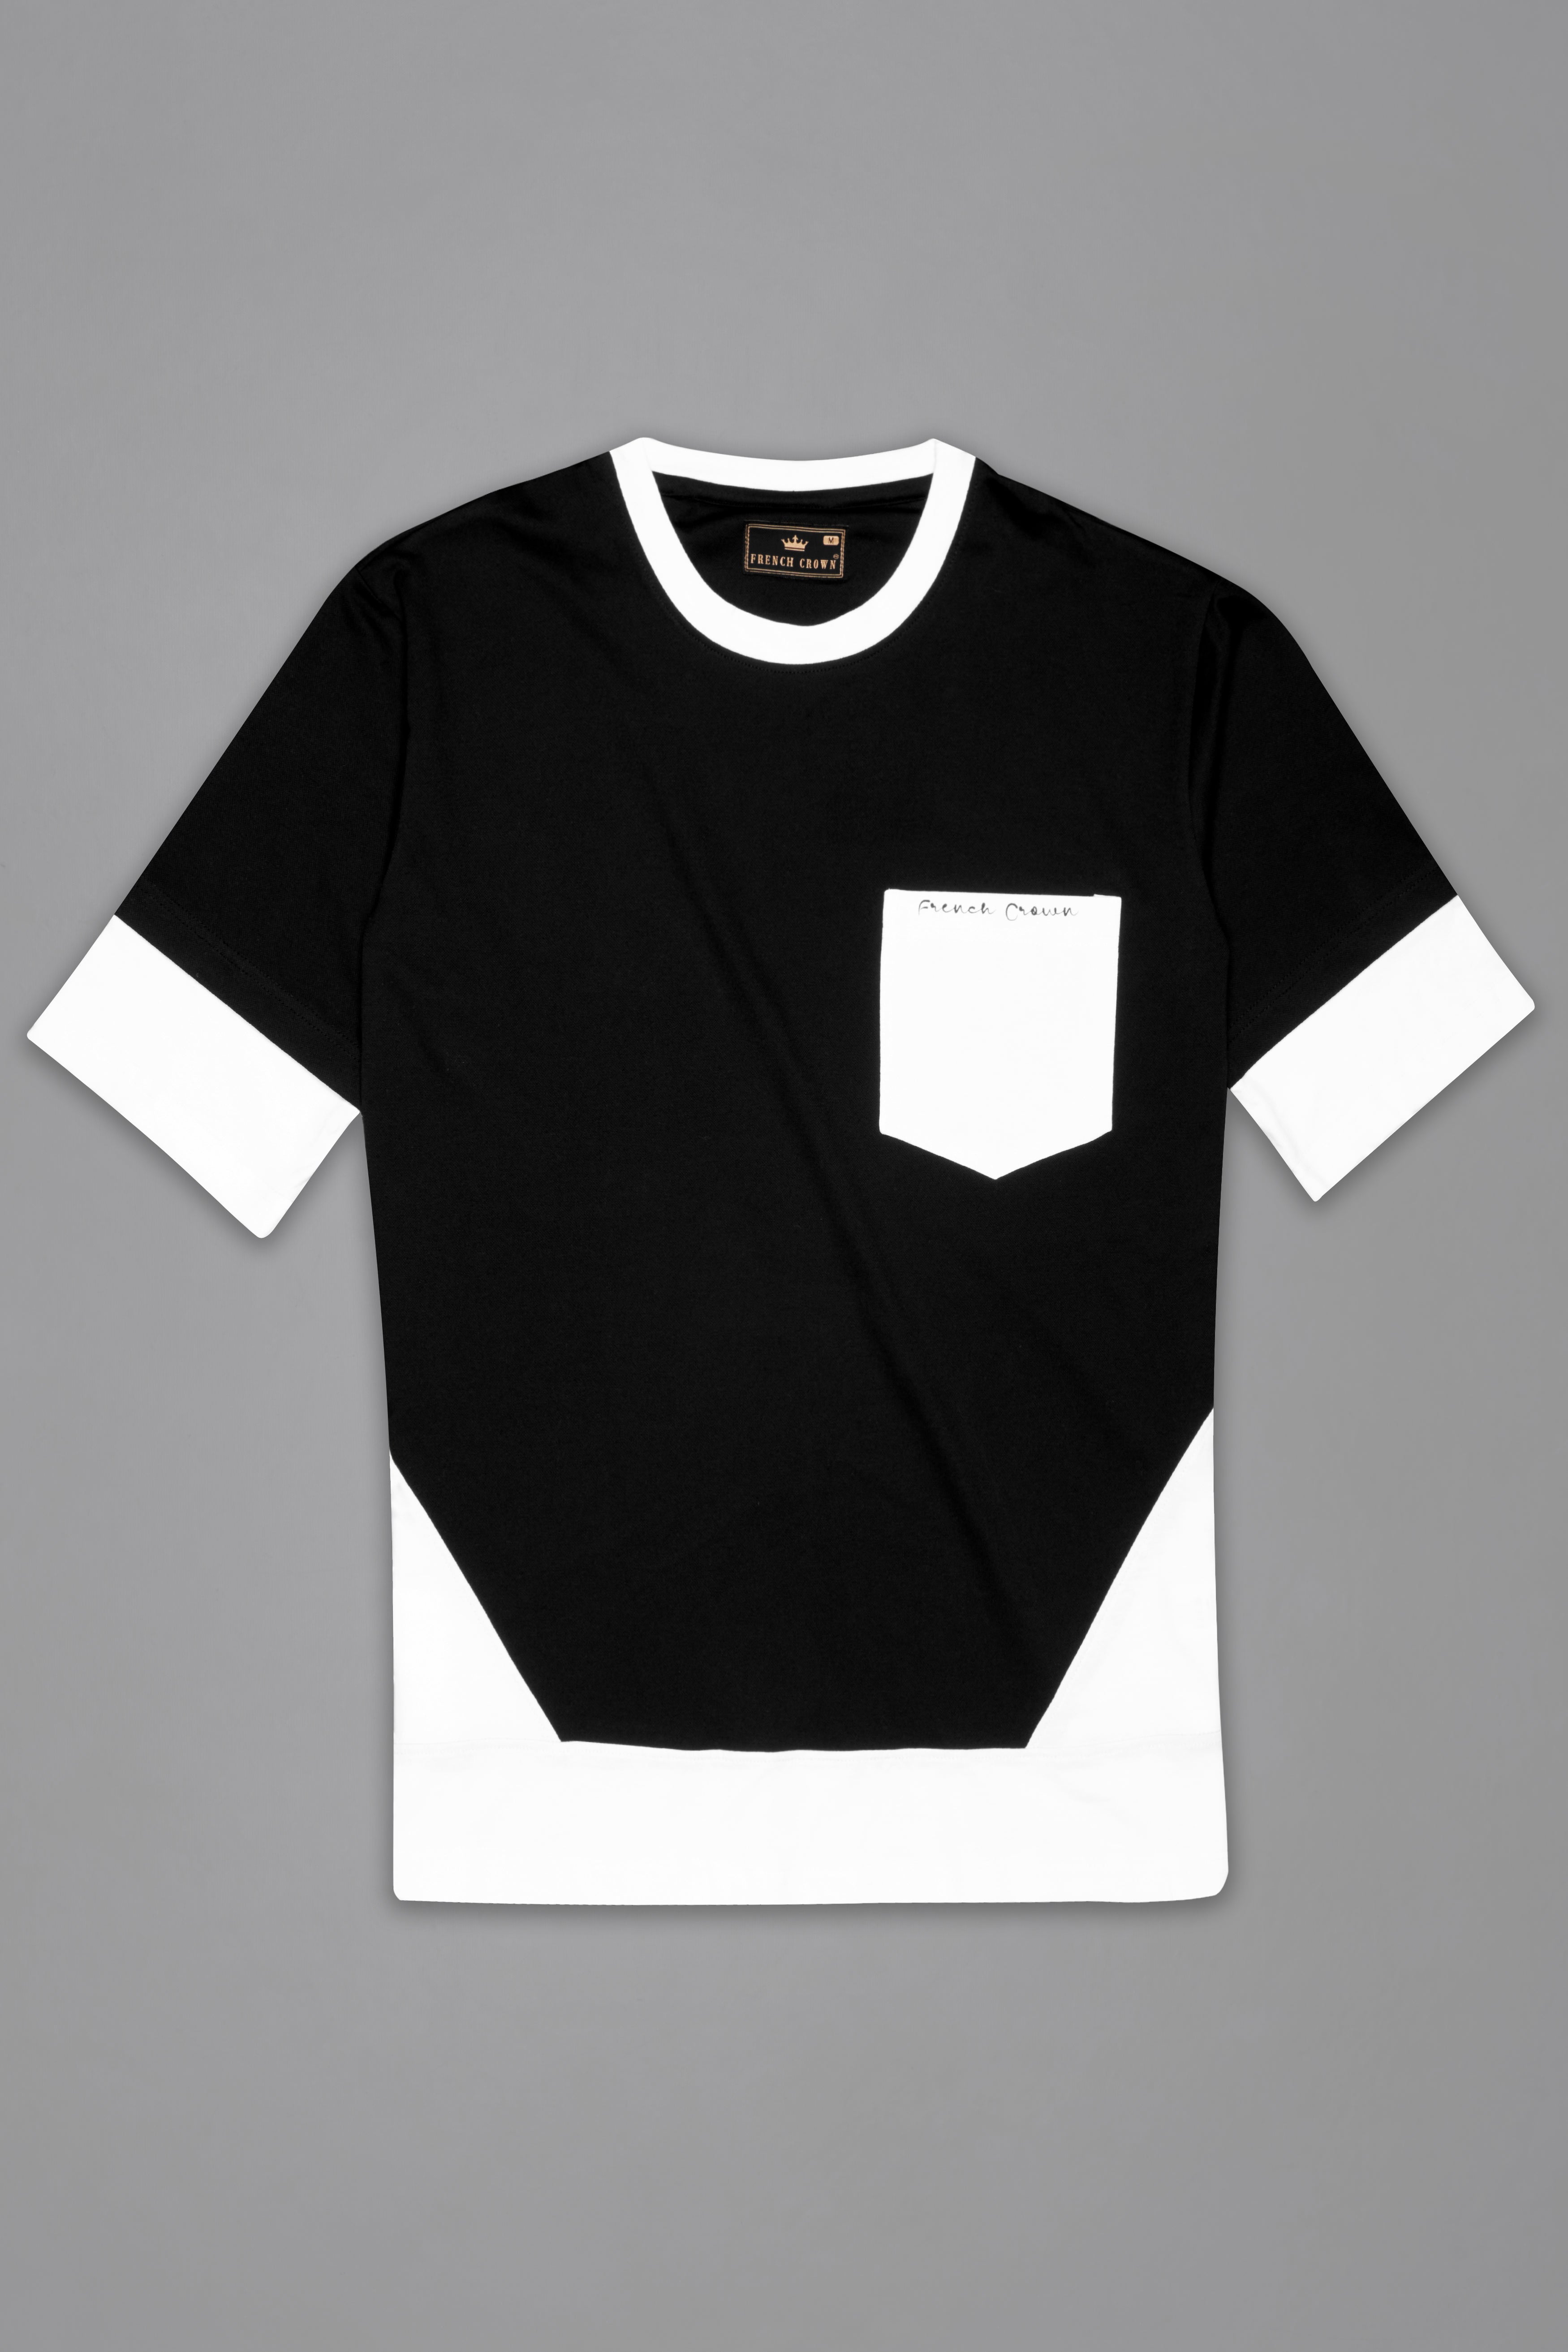 Jade Black and White Premium Cotton Jersey T-Shirt TS912-S, TS912-M, TS912-L, TS912-XL, TS912-XXL